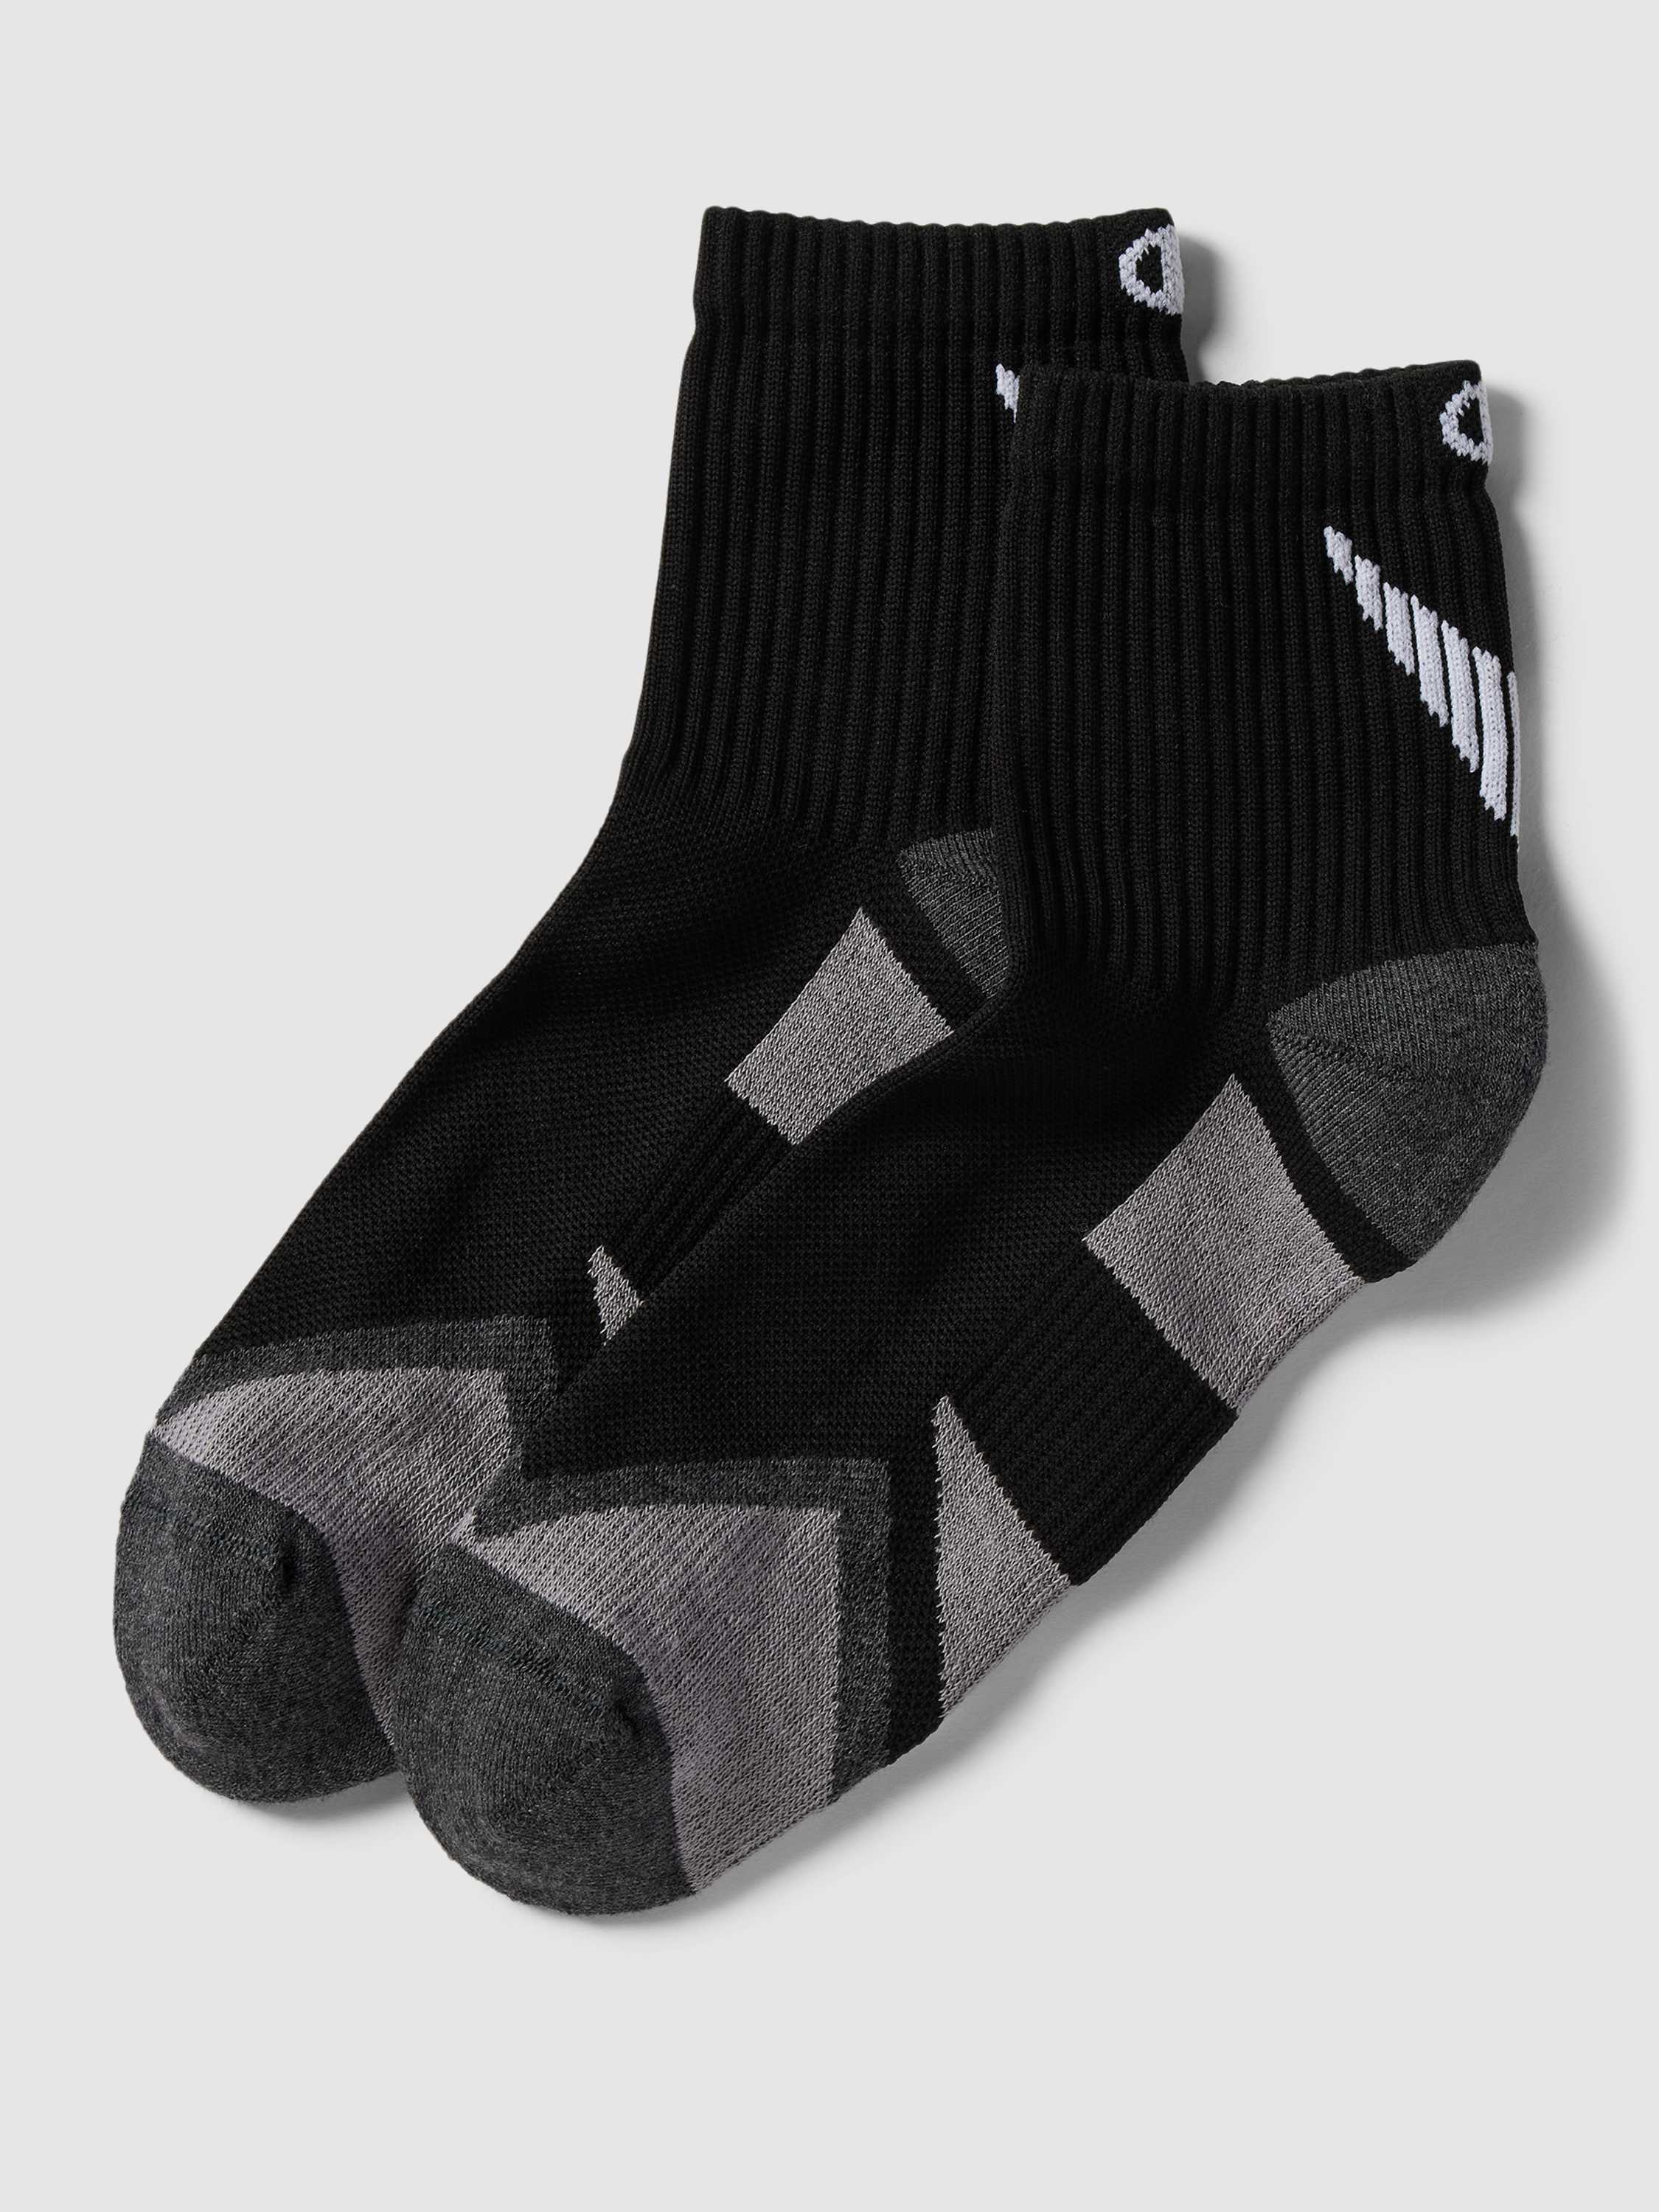 Socken mit Allover-Muster im 2er-Pack